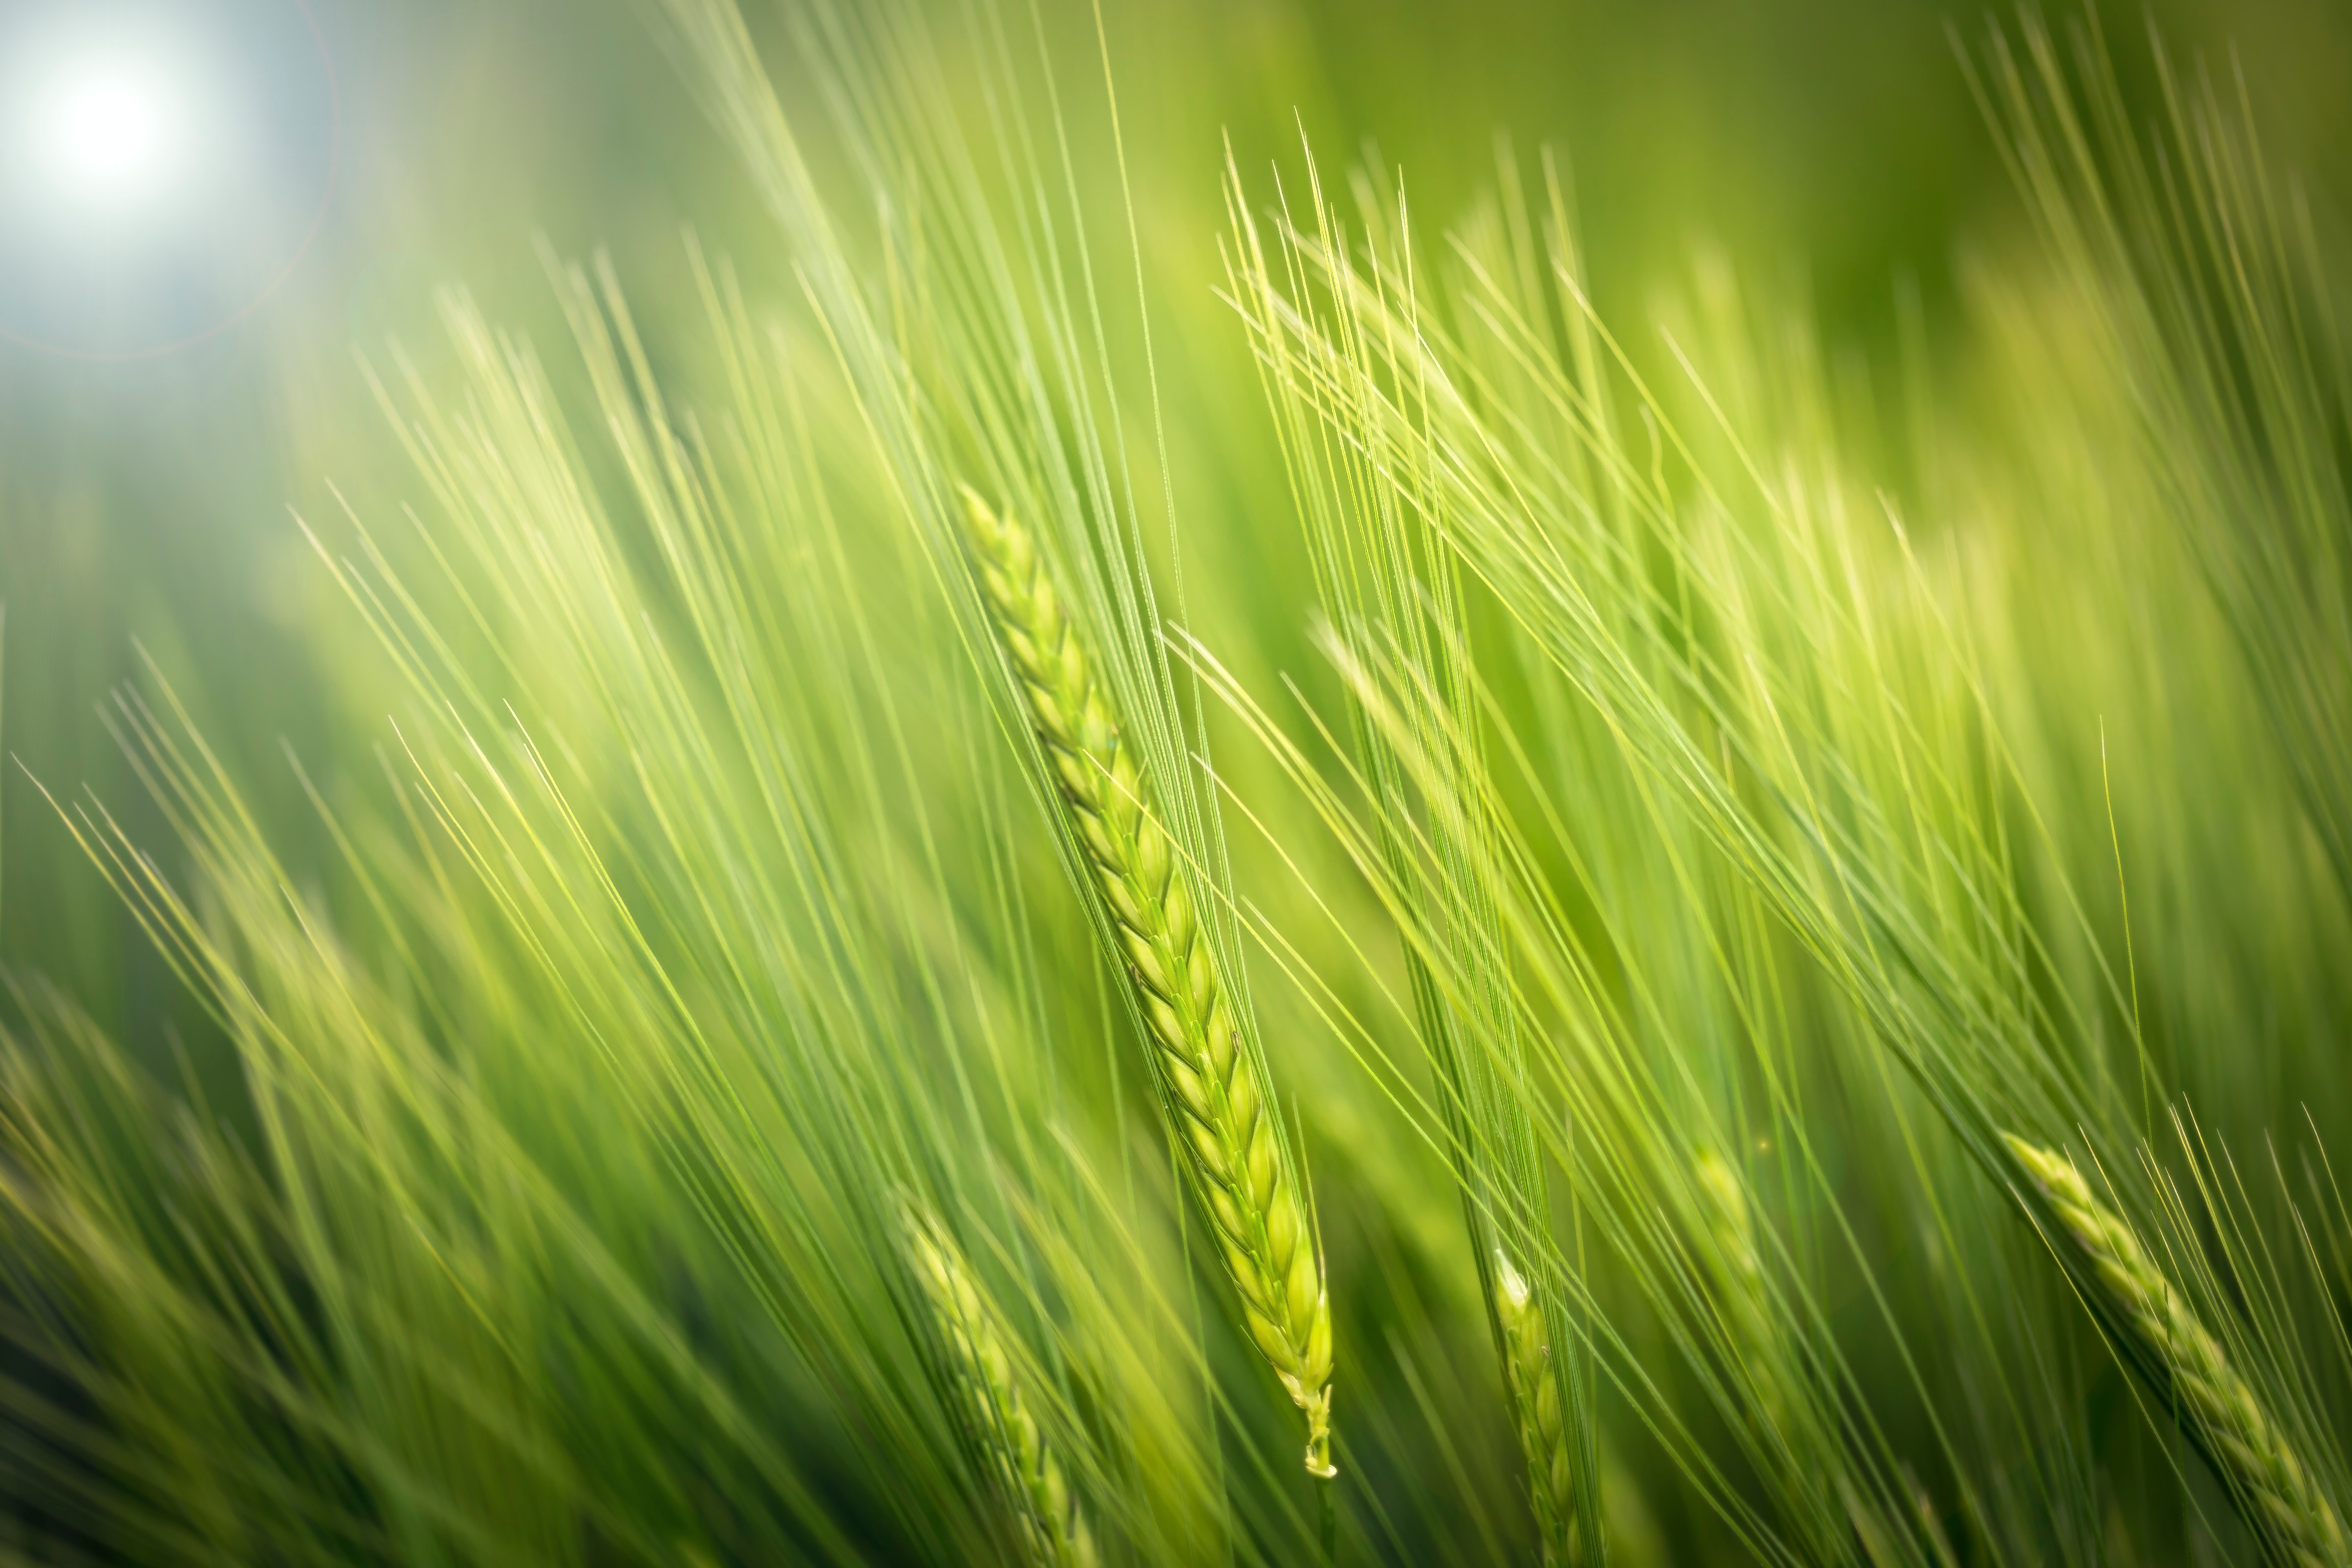 Green wheat growing